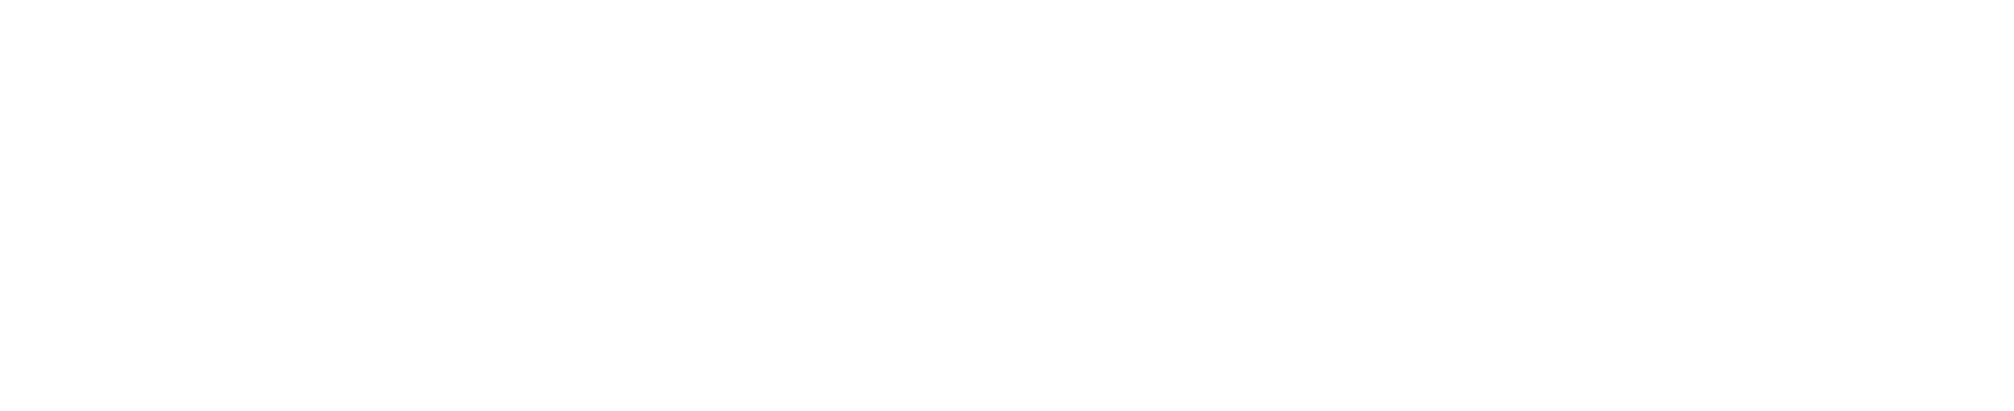 archlife logo architettura italian design